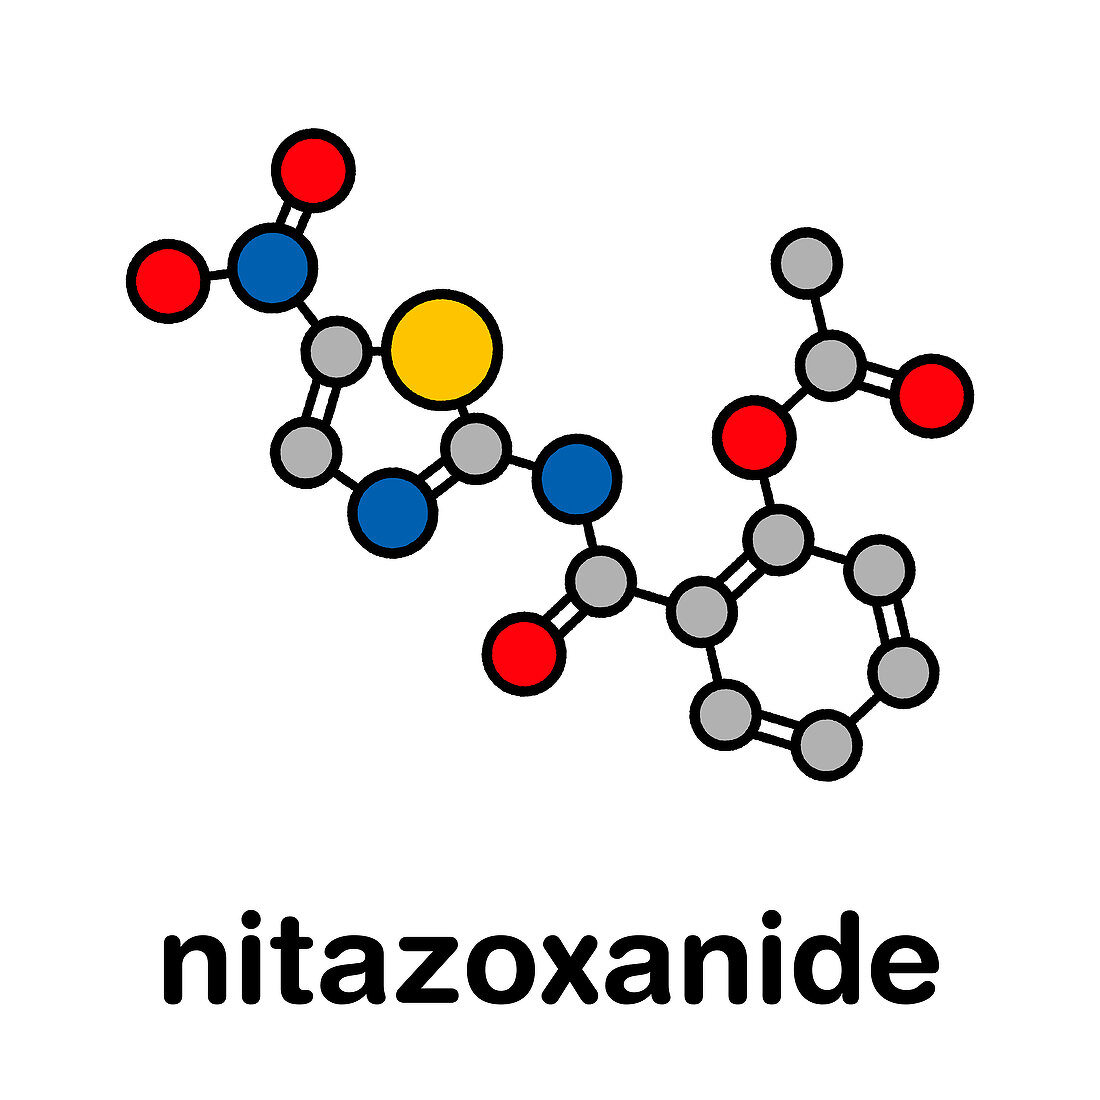 Nitazoxanide antiprotozoal drug, molecular model